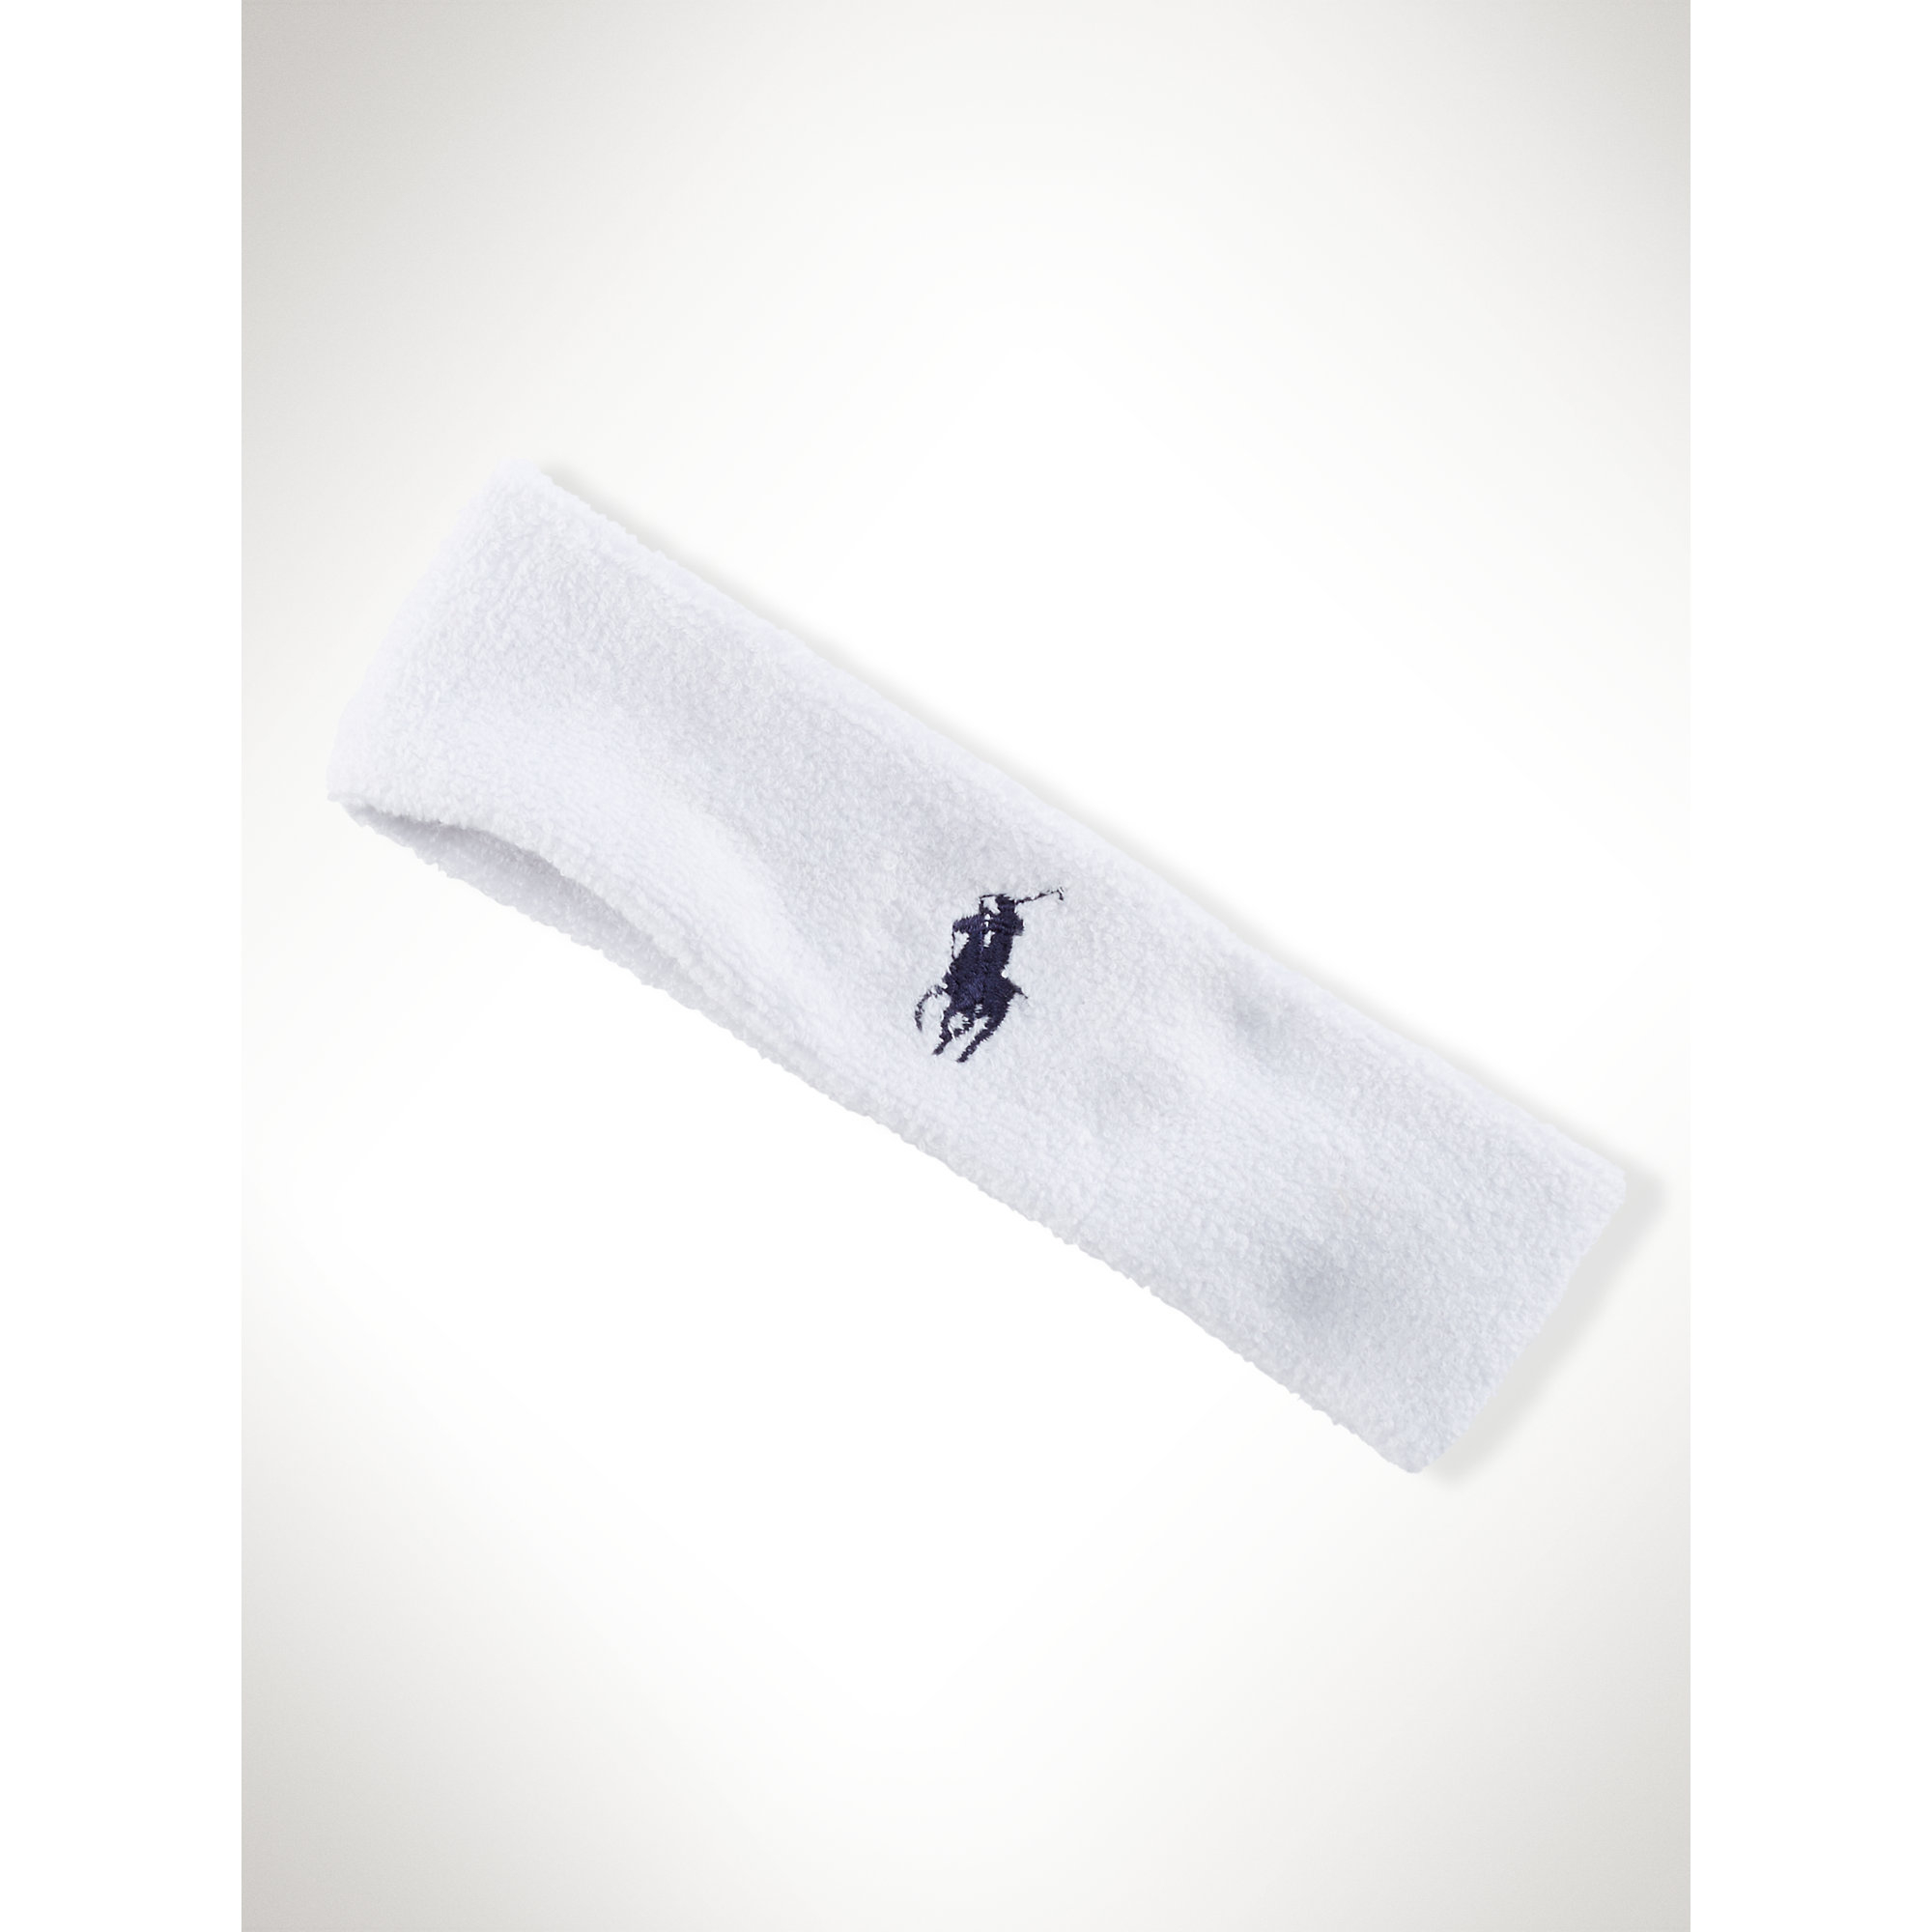 Polo Ralph Lauren Pony Sweatband in White for Men - Lyst